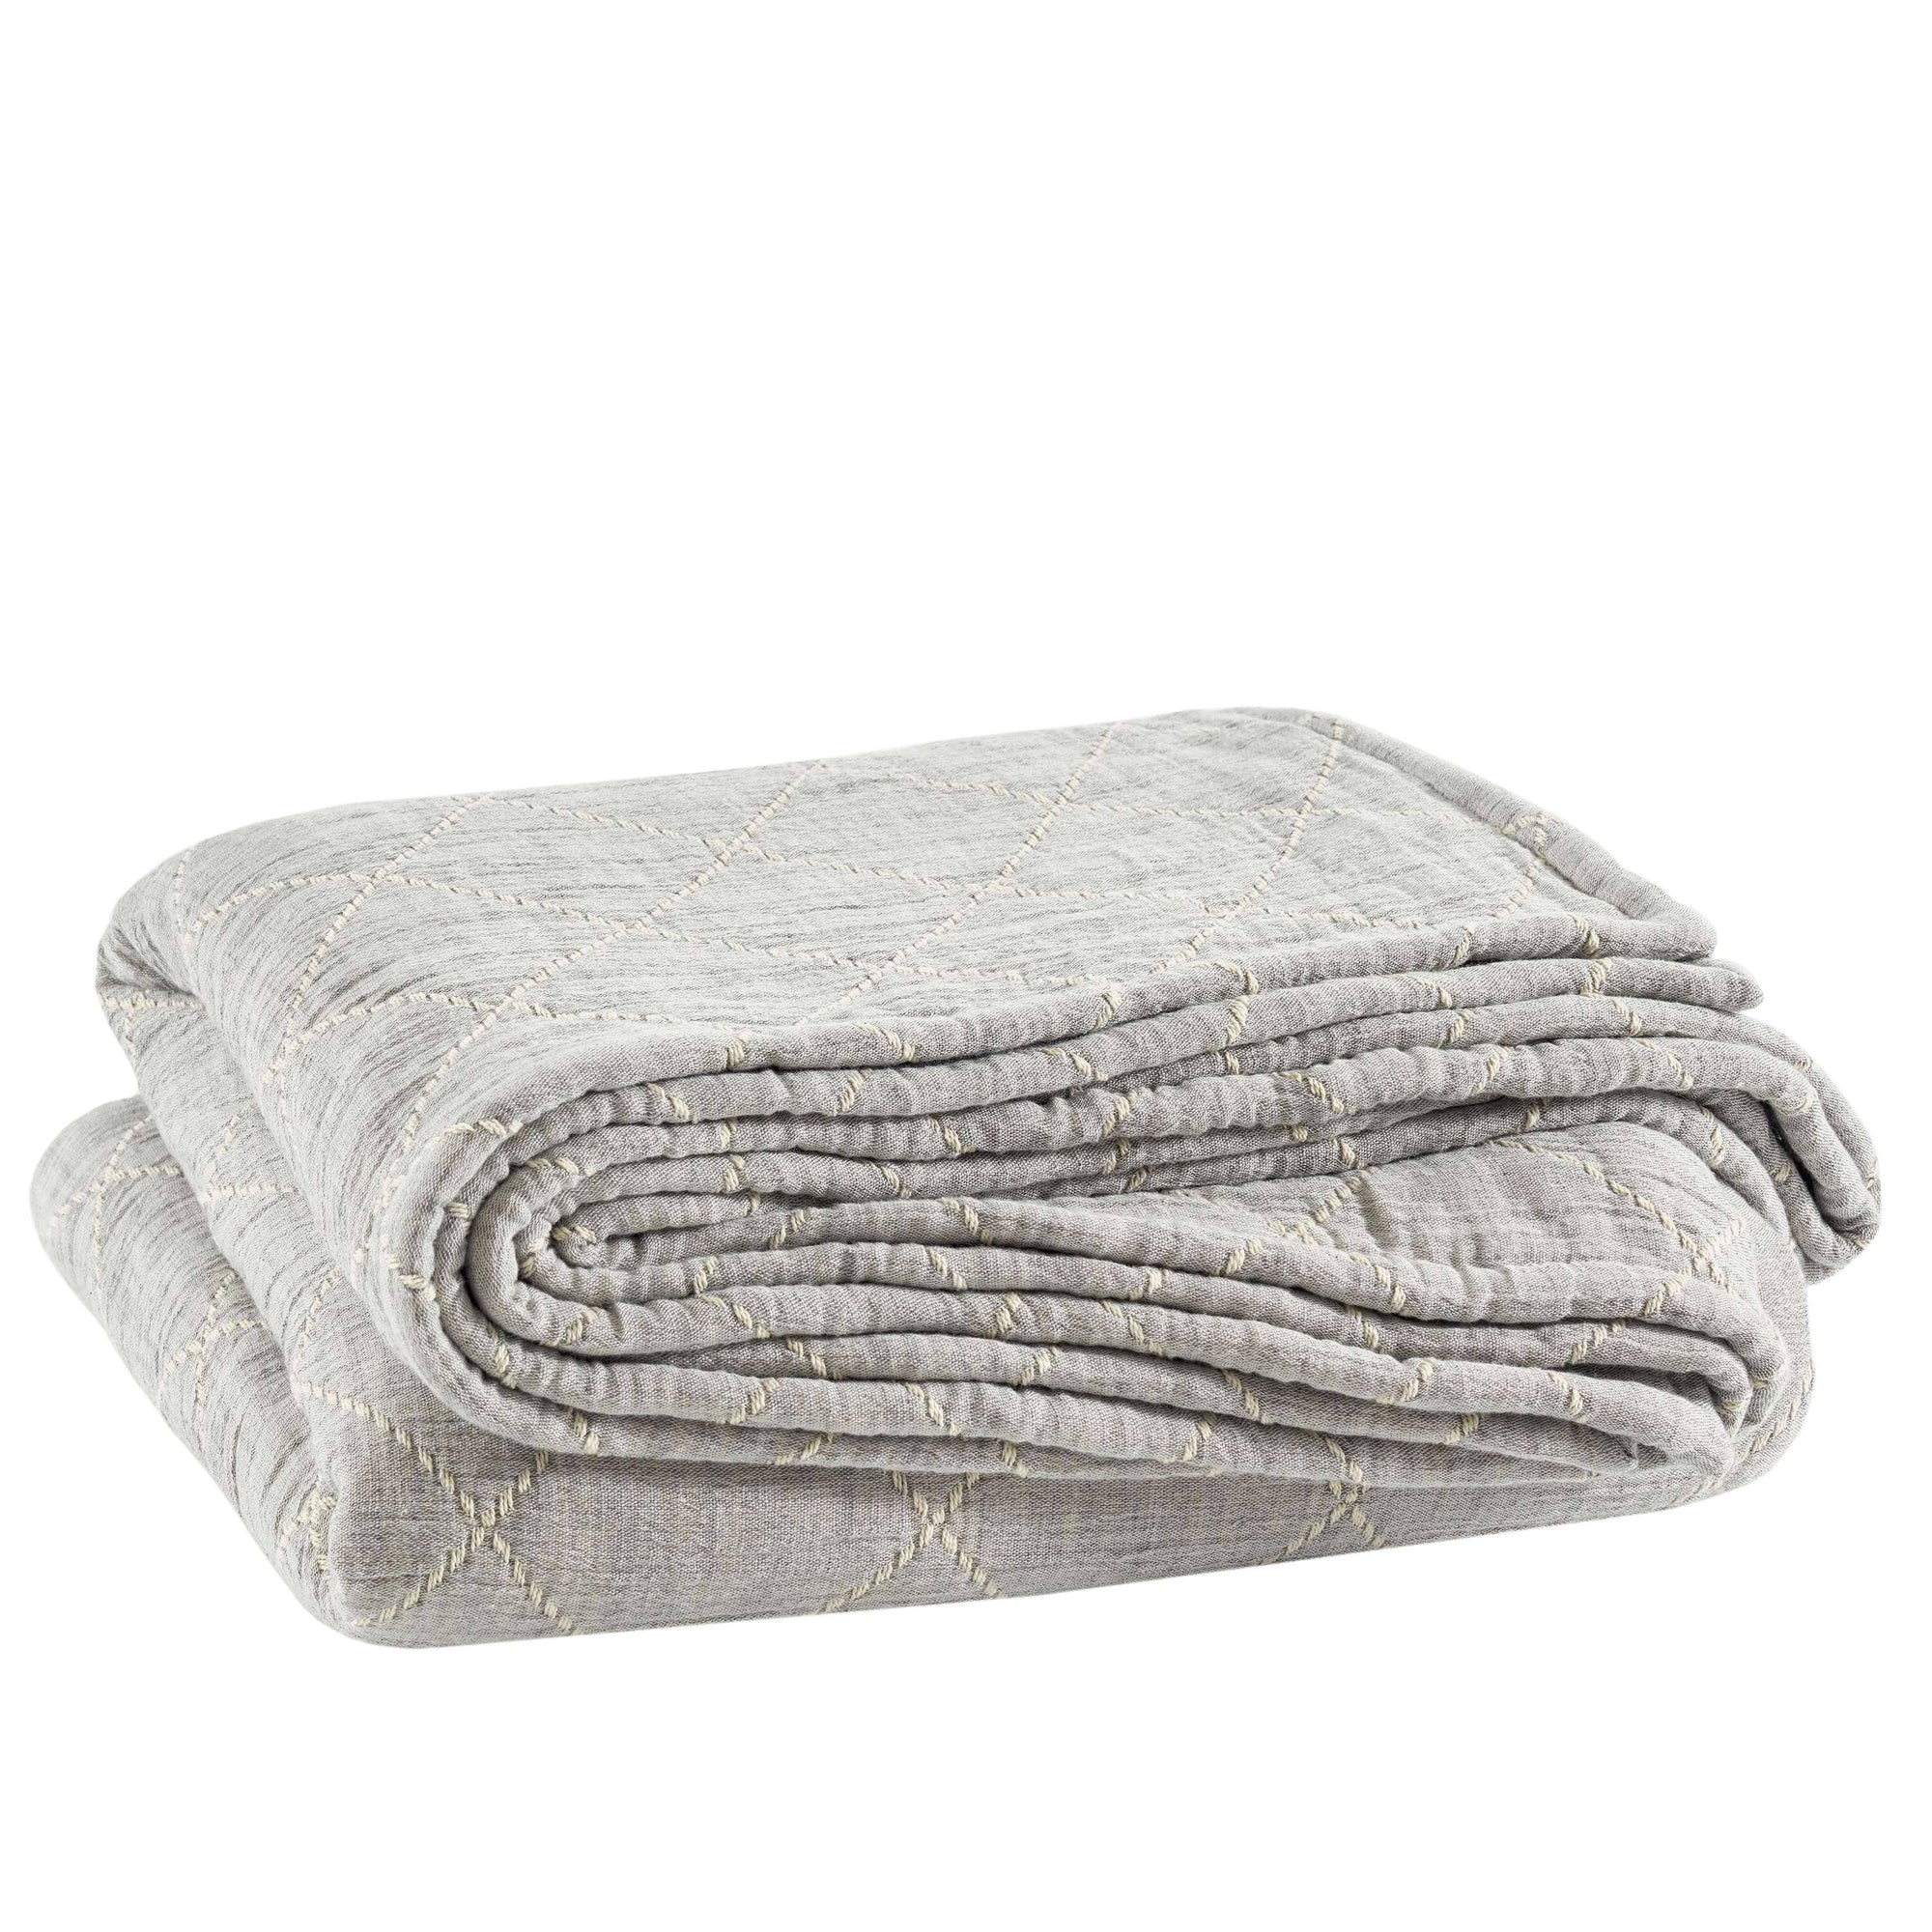 Tilden Natural/Grey Matelasse Coverlet Comforters, Quilts & Coverlets 